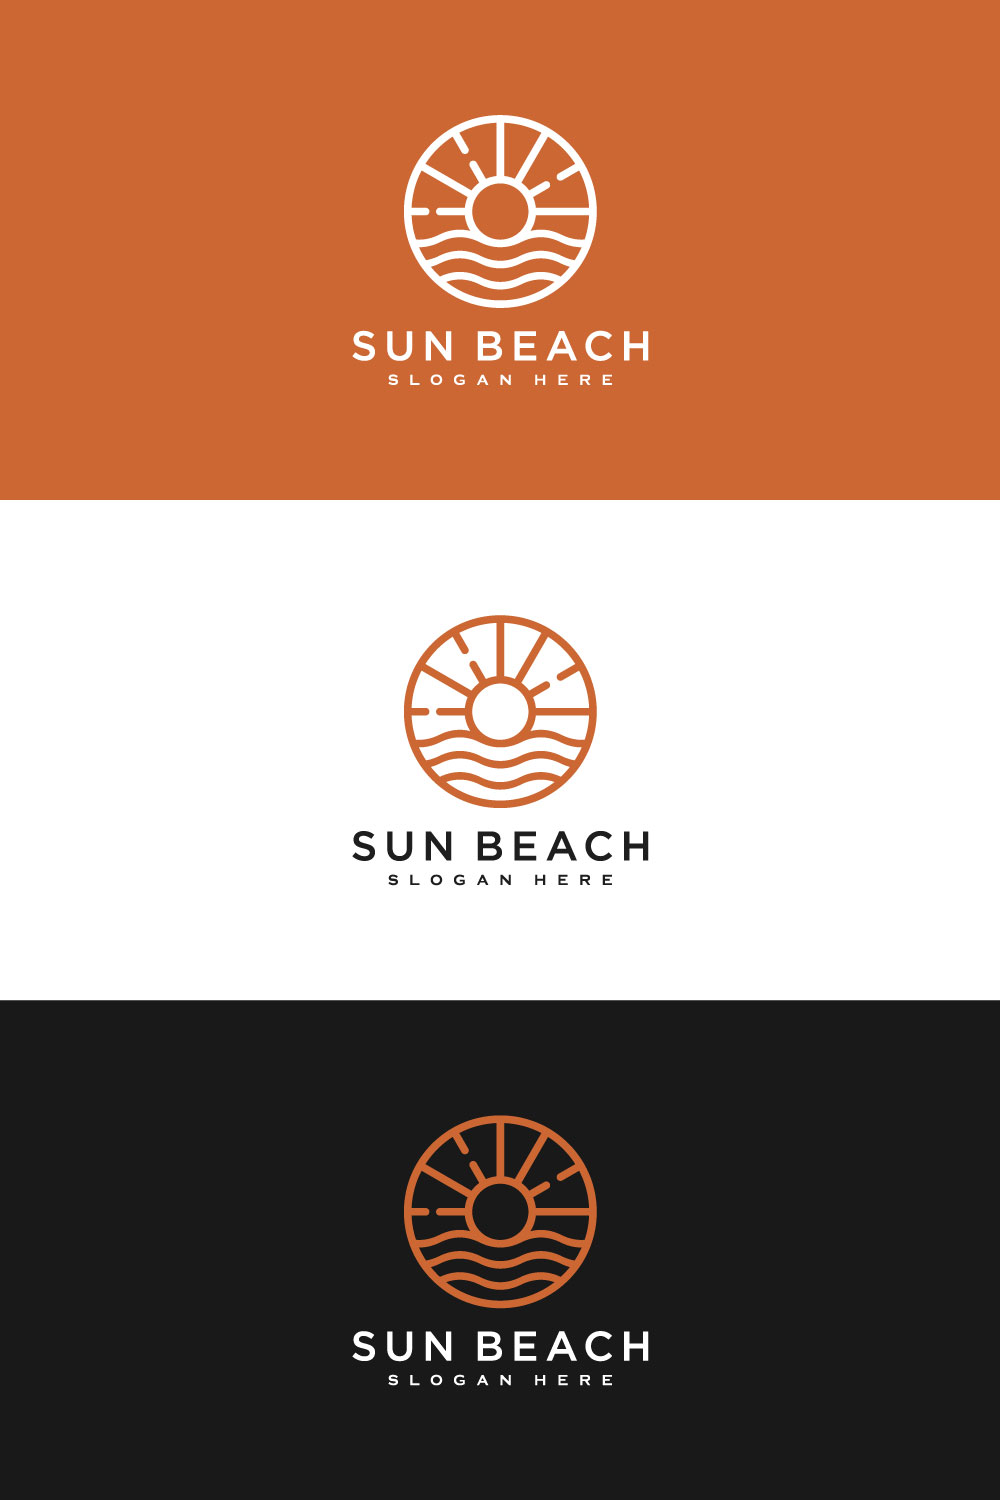 Sun Beach Logo Design Premium Vector Pinterest Image.